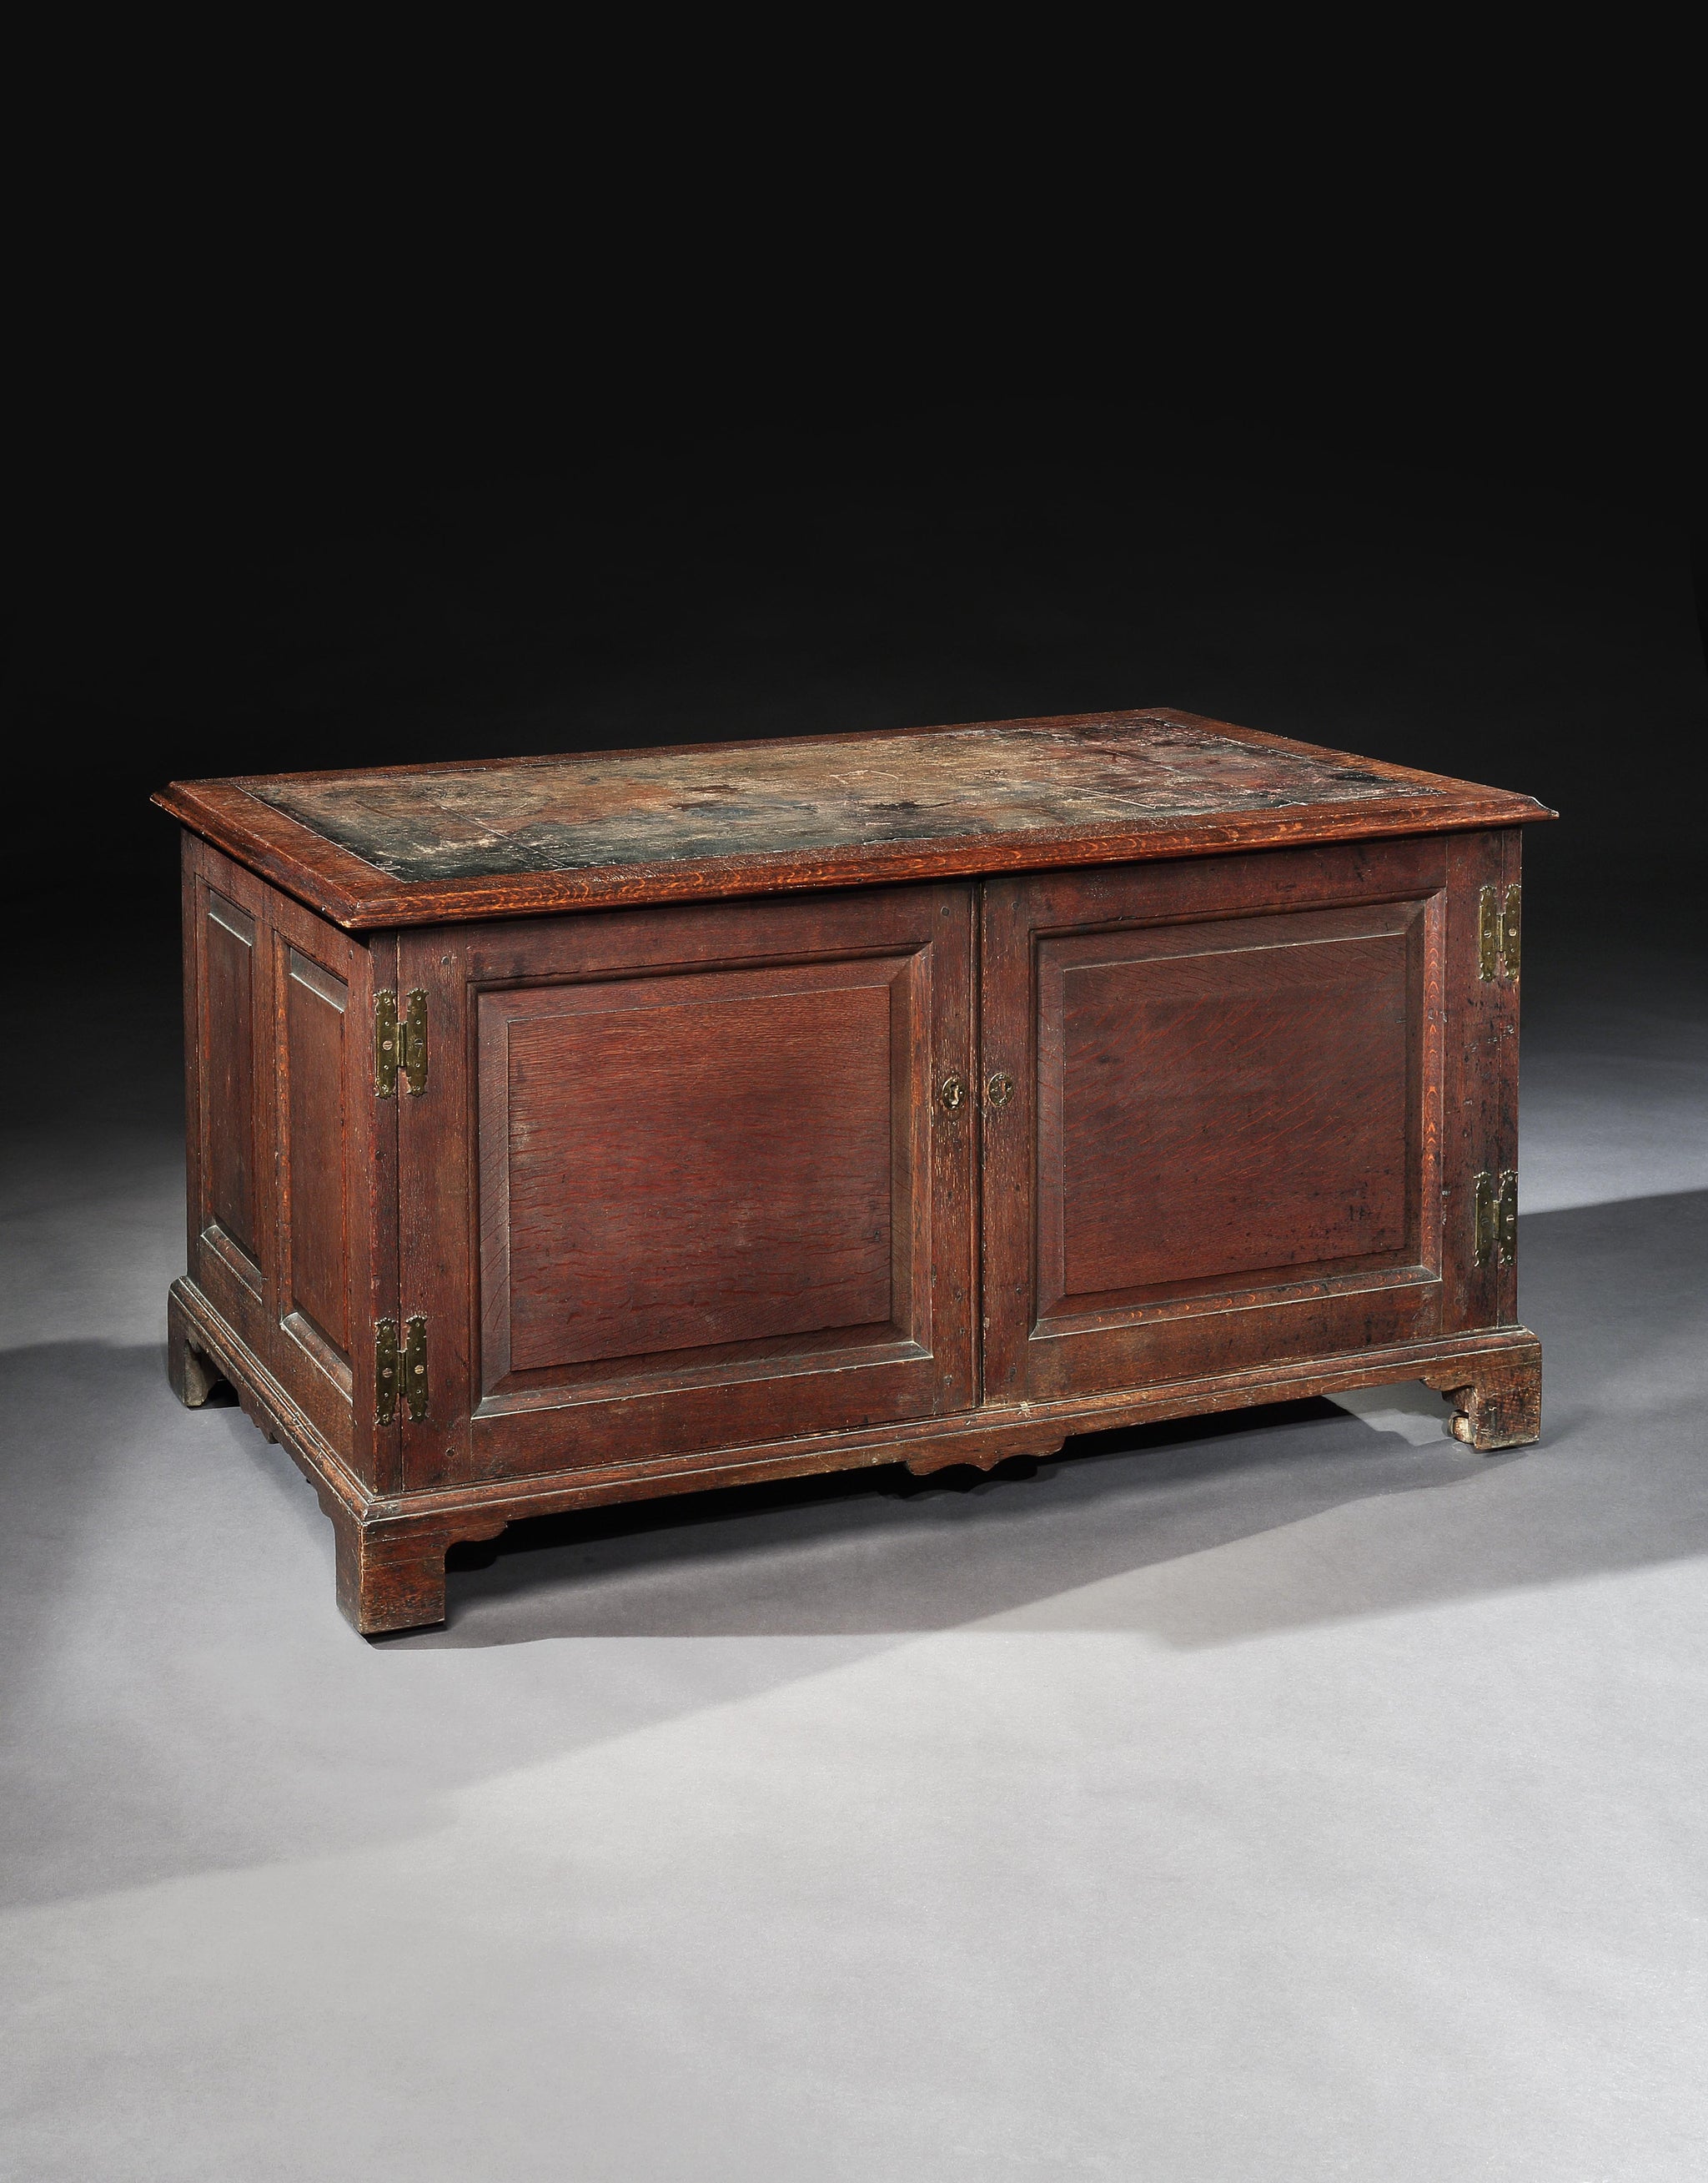 Rare George II Period Vernacular Partners Desk (Image of Reverse)